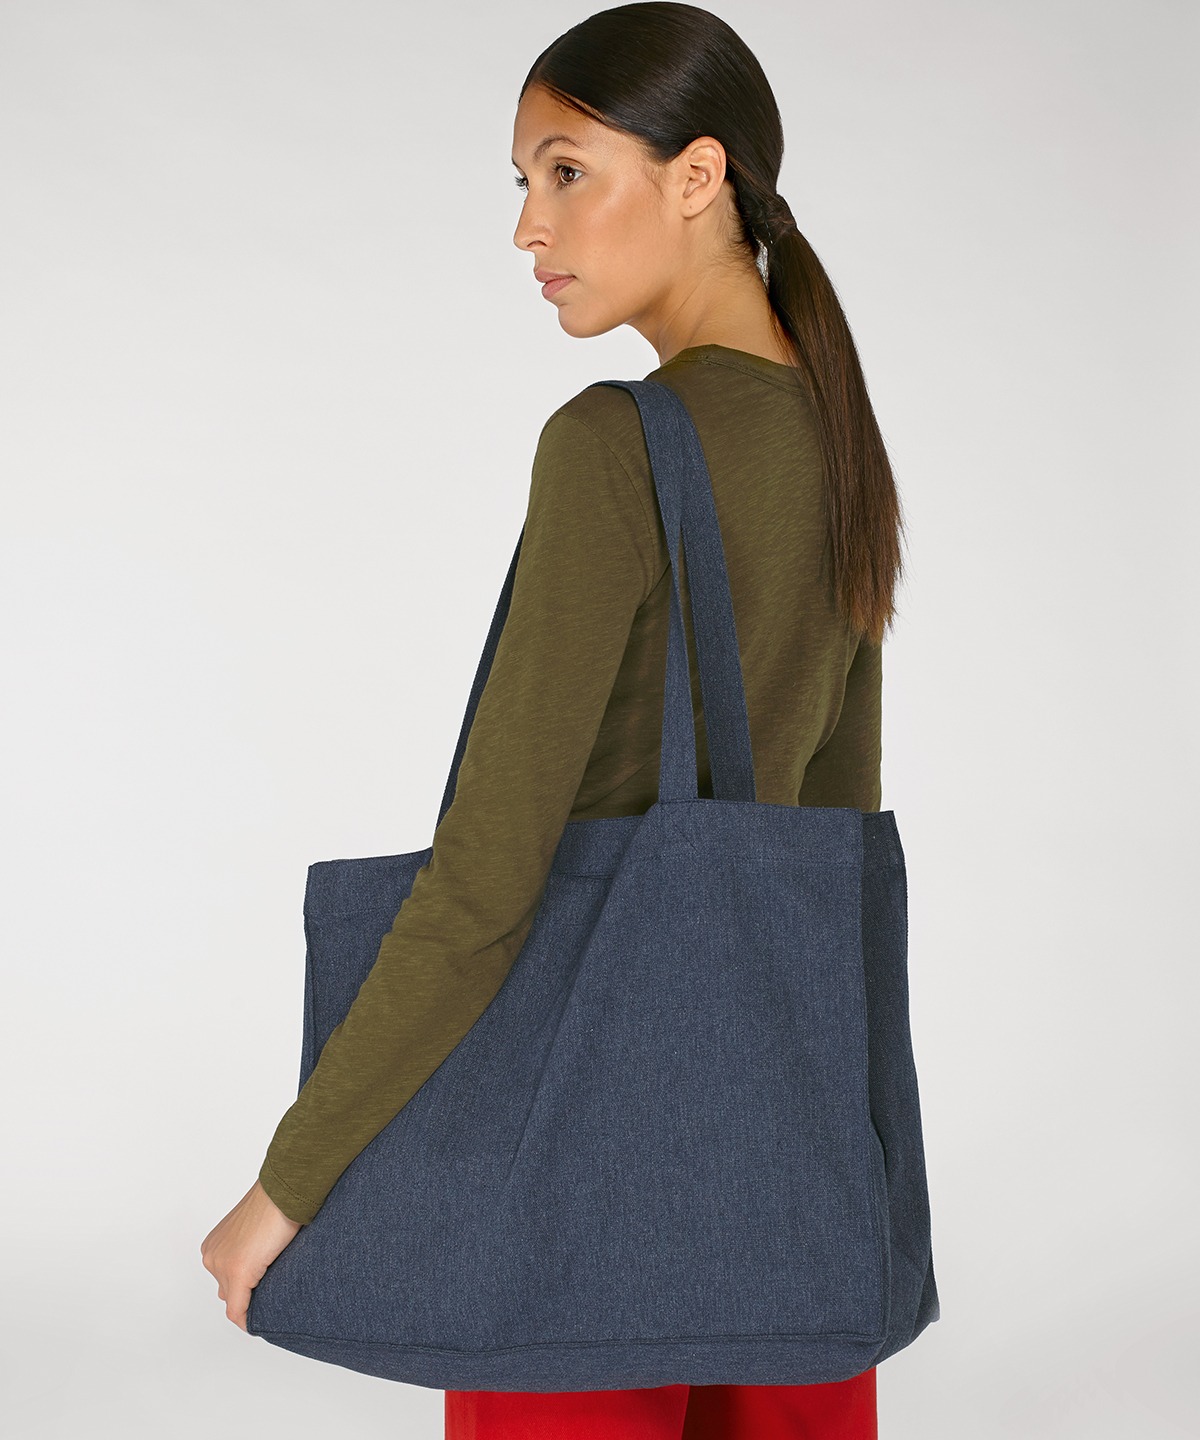 Woven Shopping Bag | ESP Merchandise